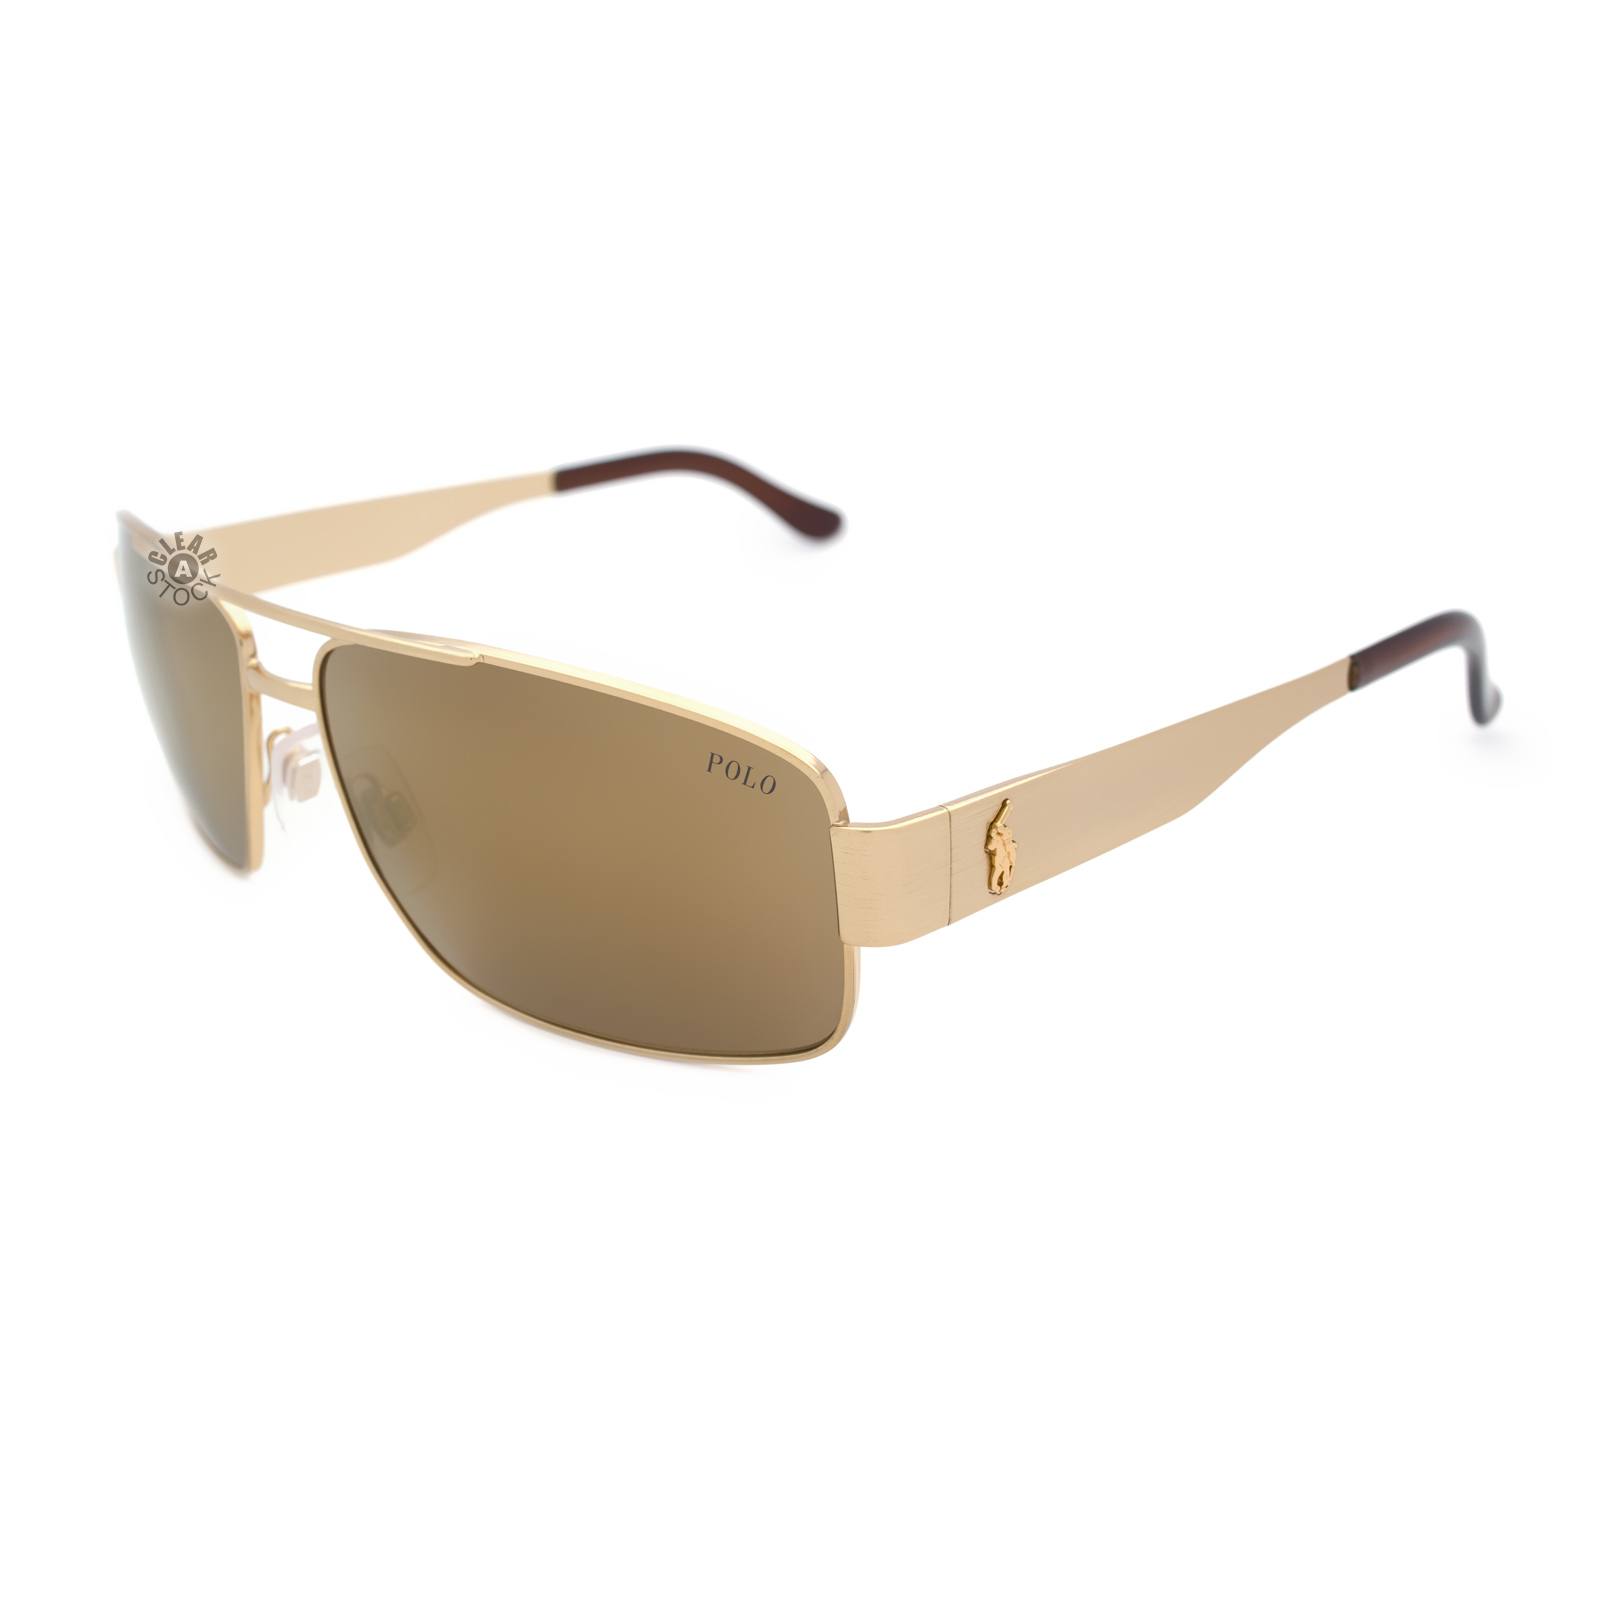 Golden beige Lunettebm190p03 sunglasses